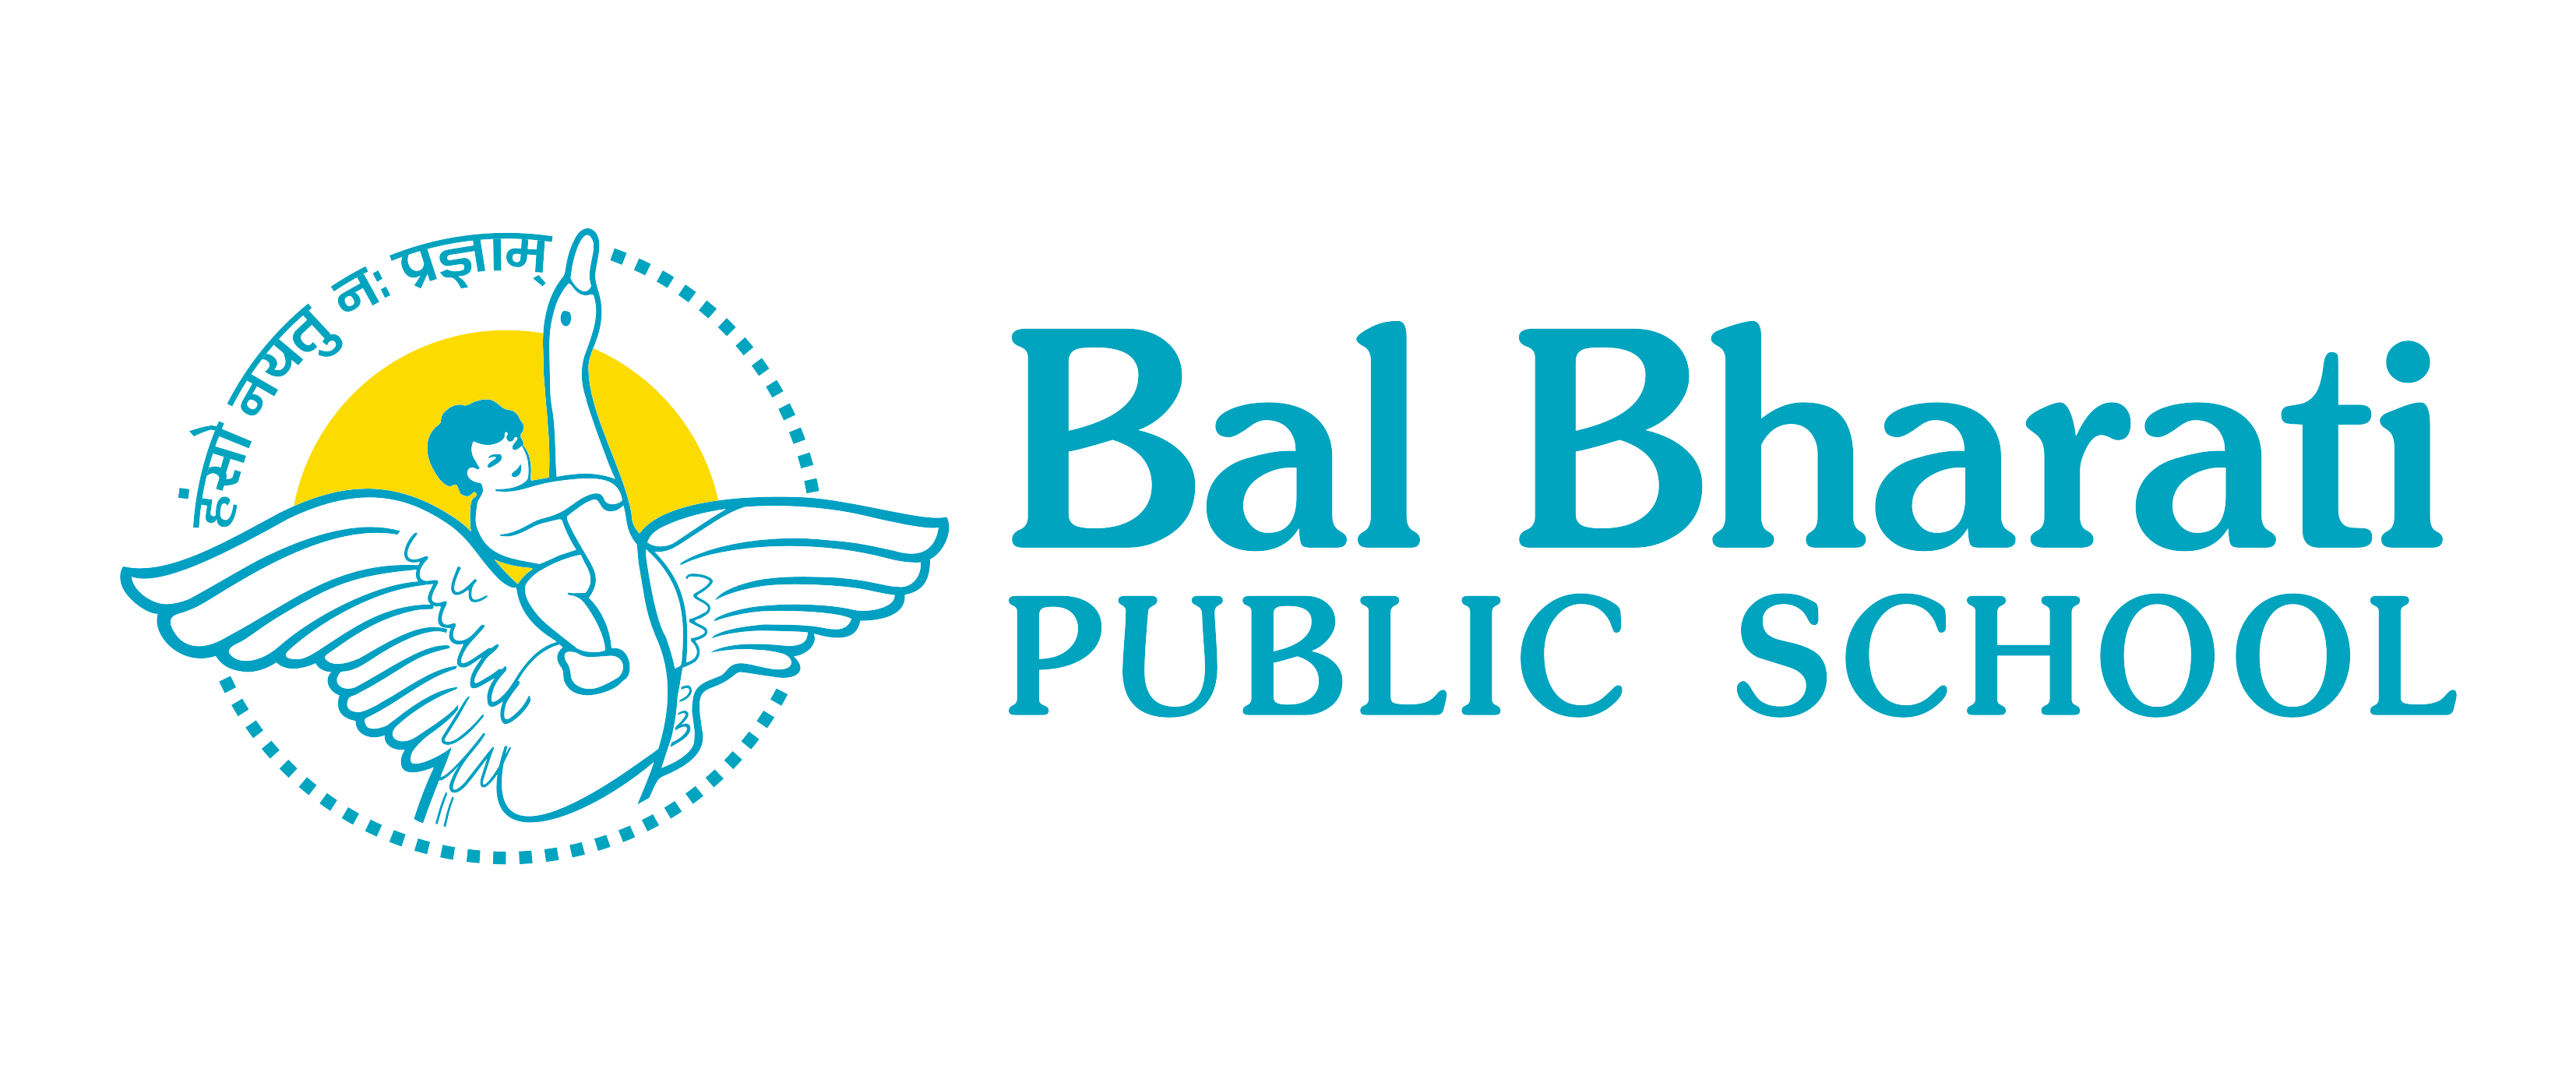 Bal Bharati Public School - Bal Bharti School Logo - HD Wallpaper 